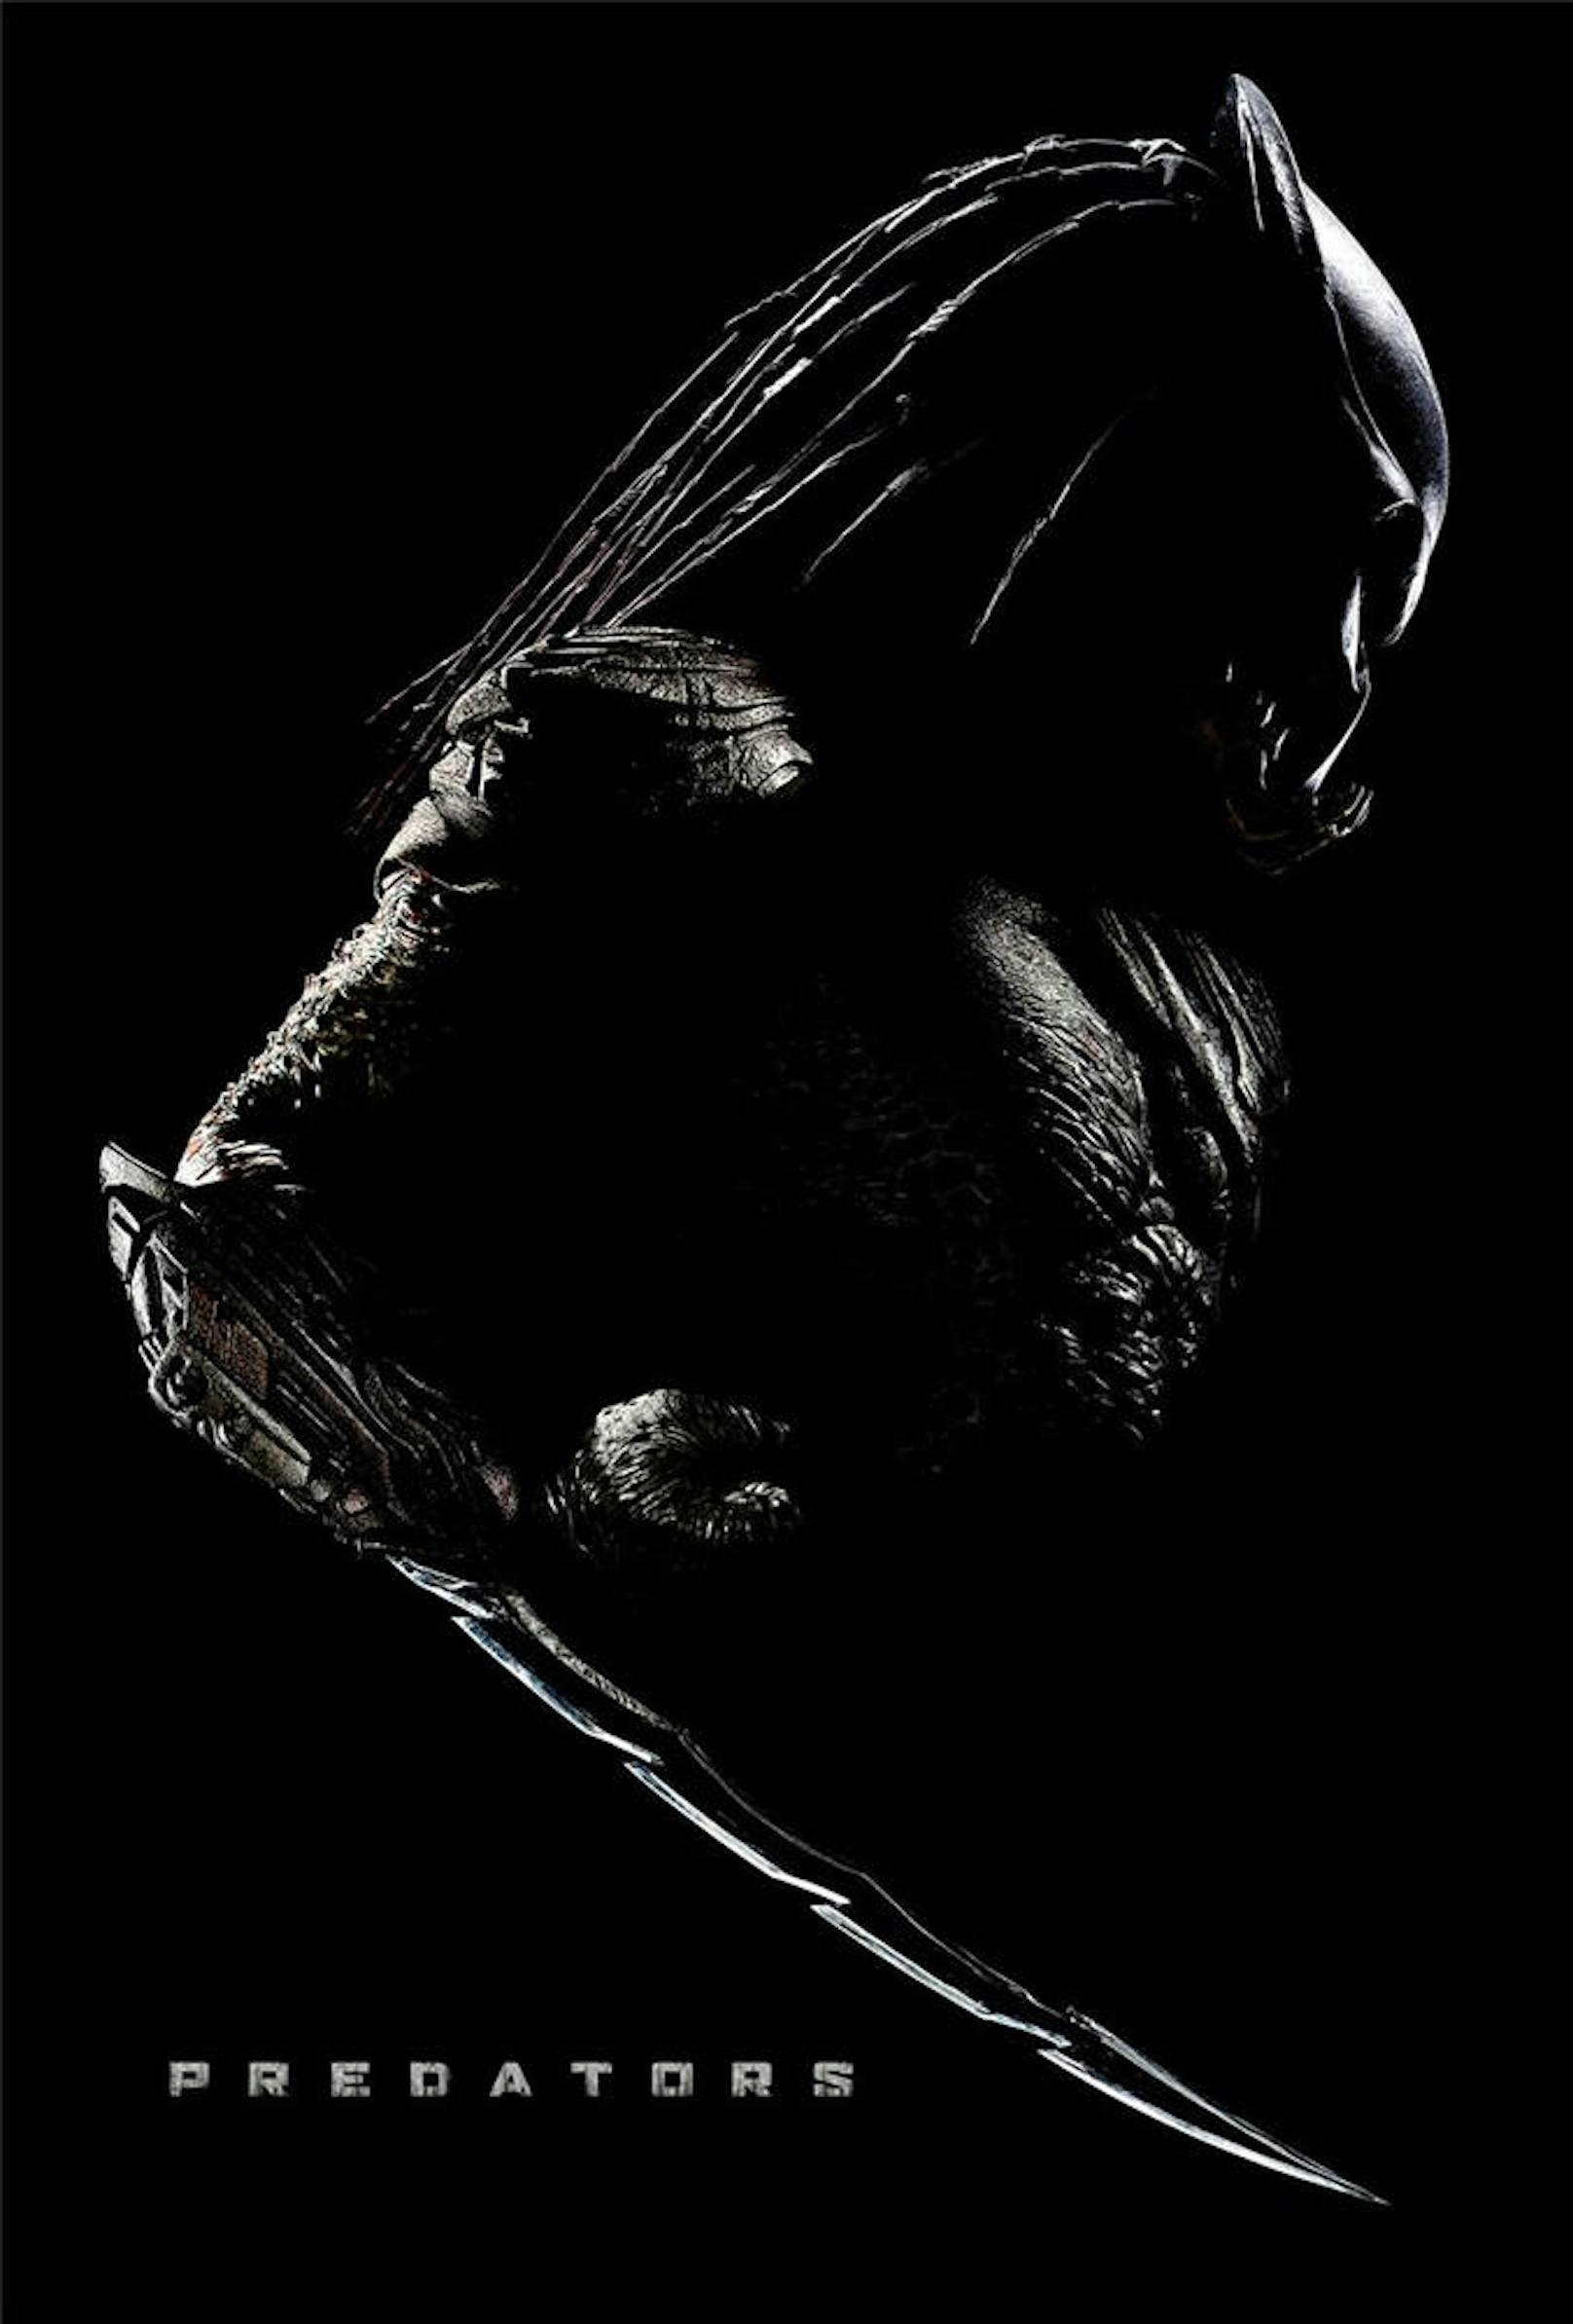 Plakat von "Predators" (2010)